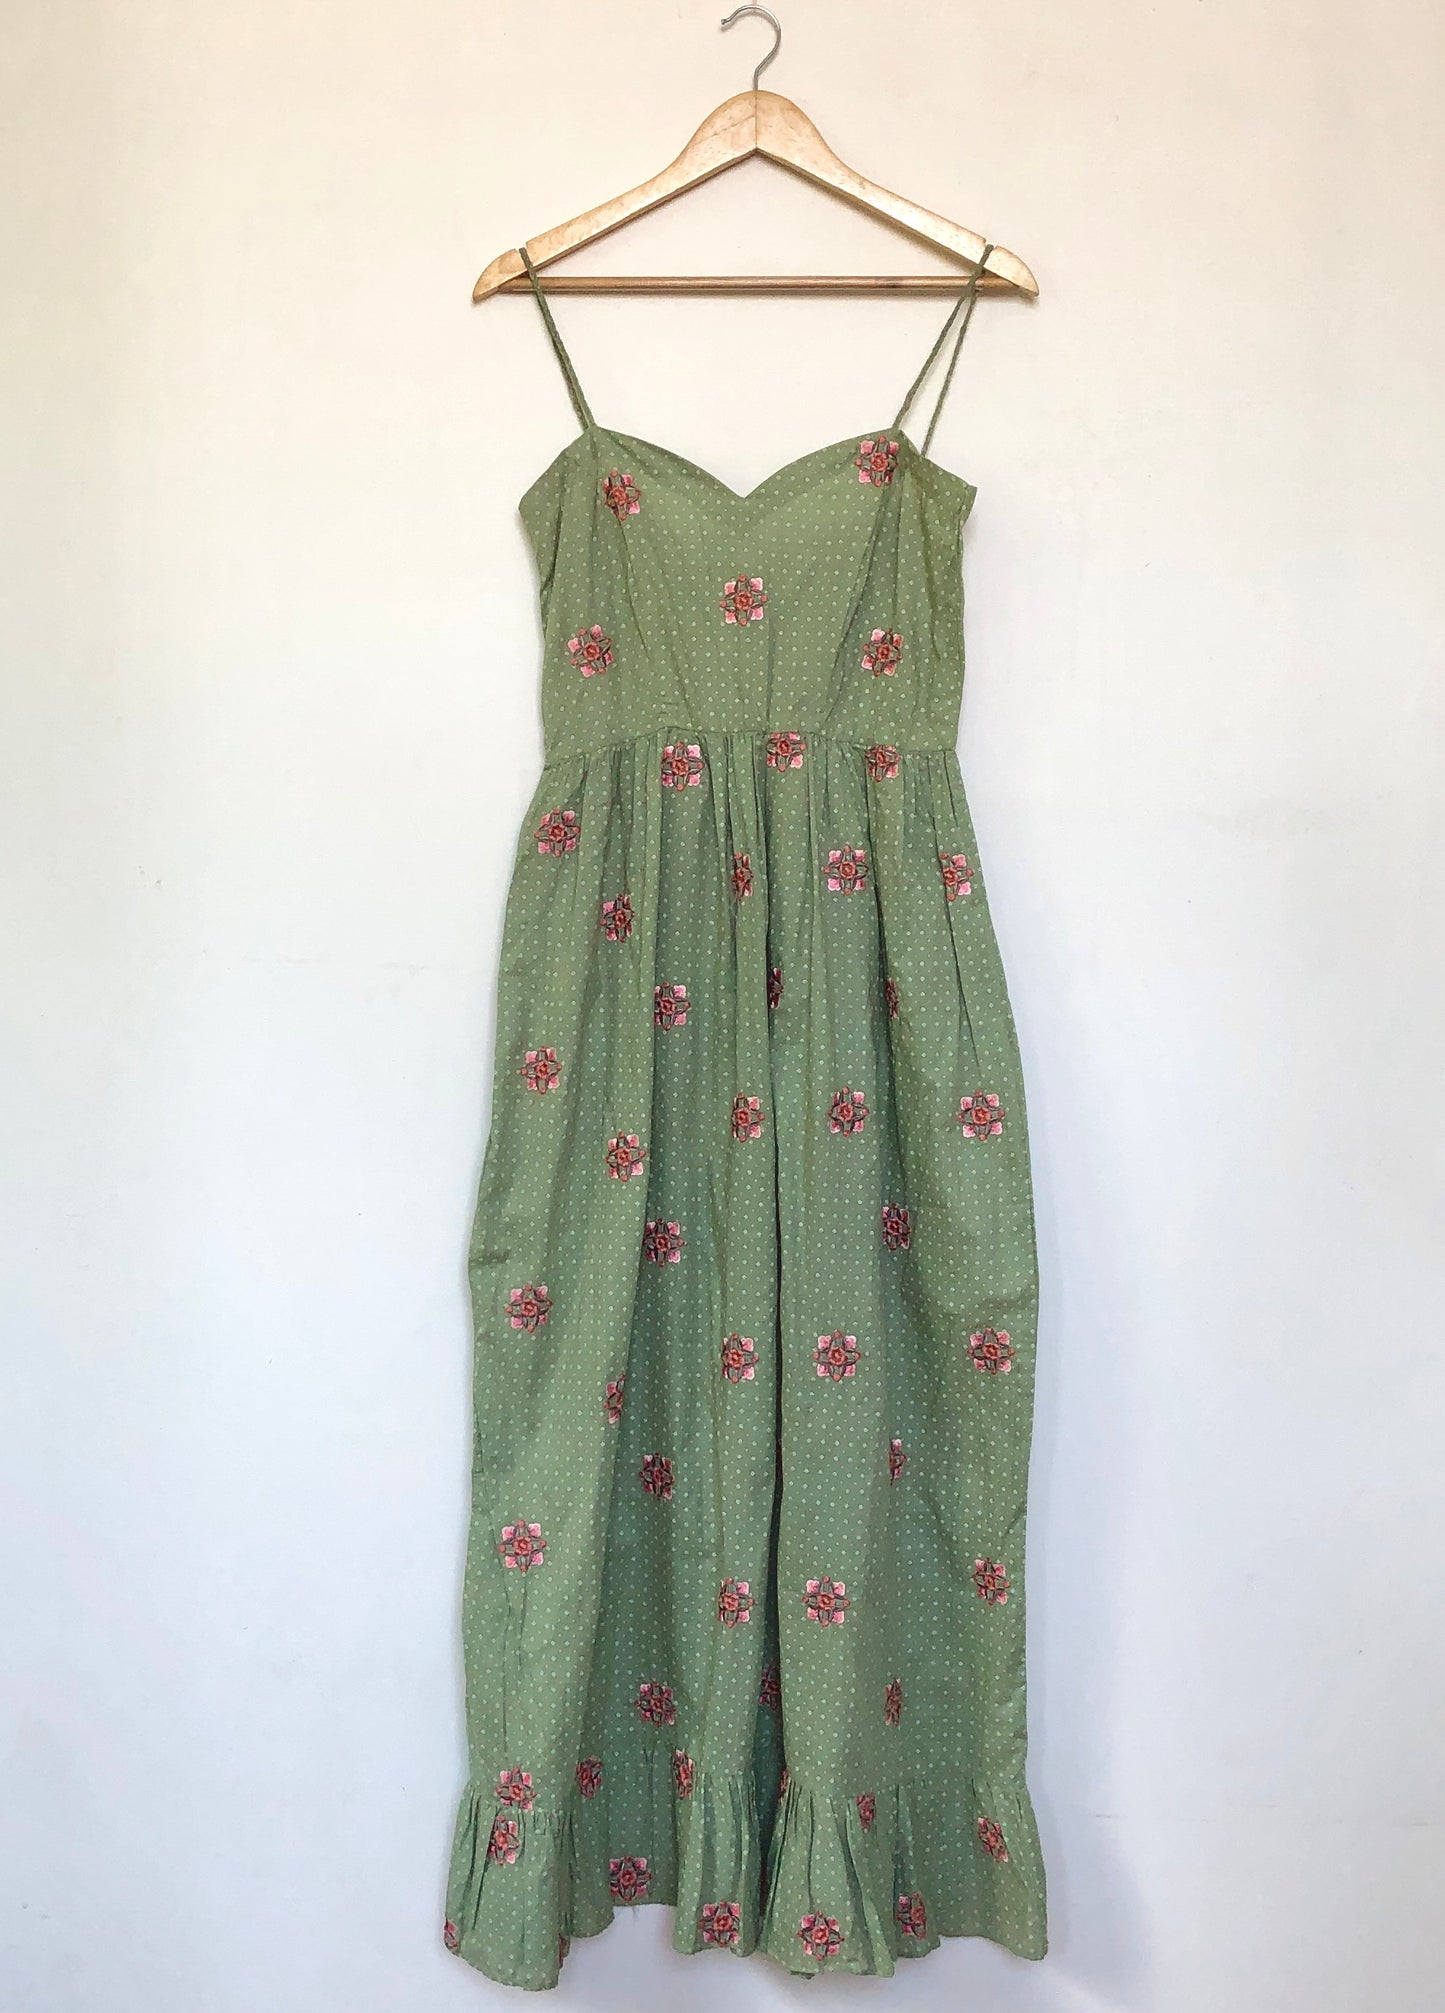 Azalea embroidered dress